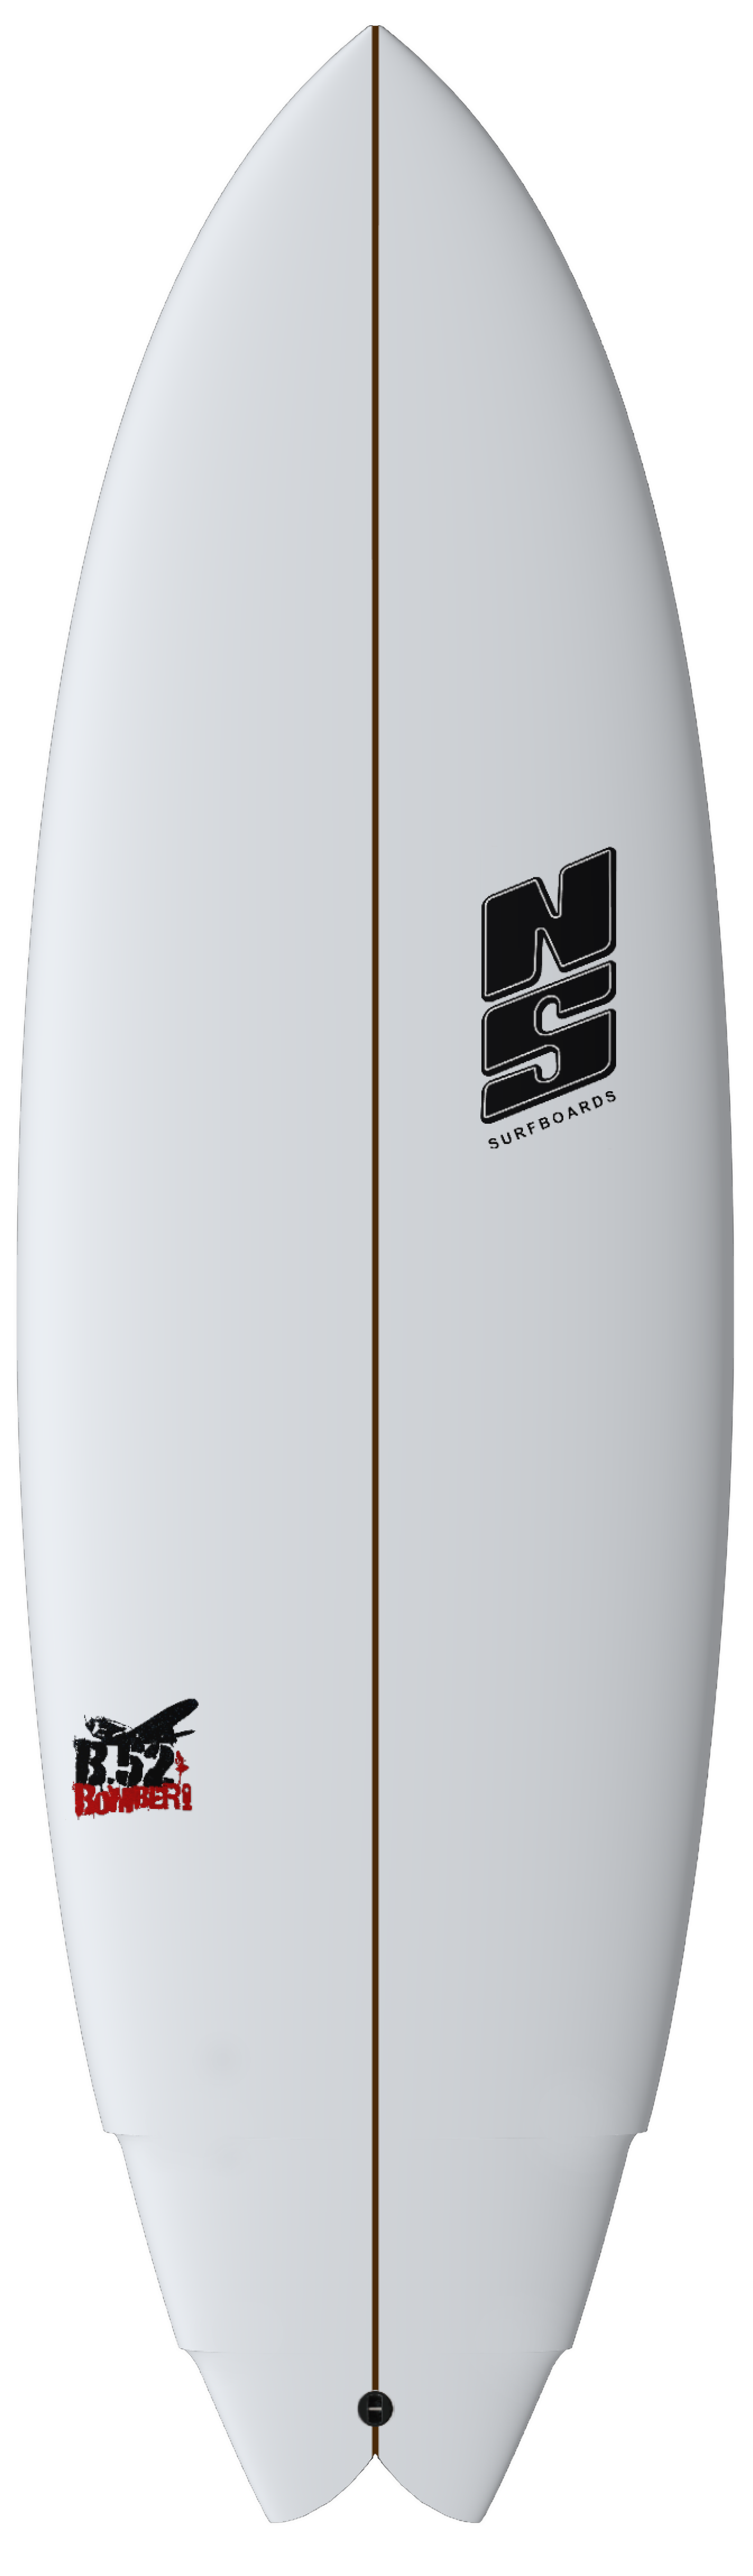 nigel semmens b52 surfboard in white and black logo